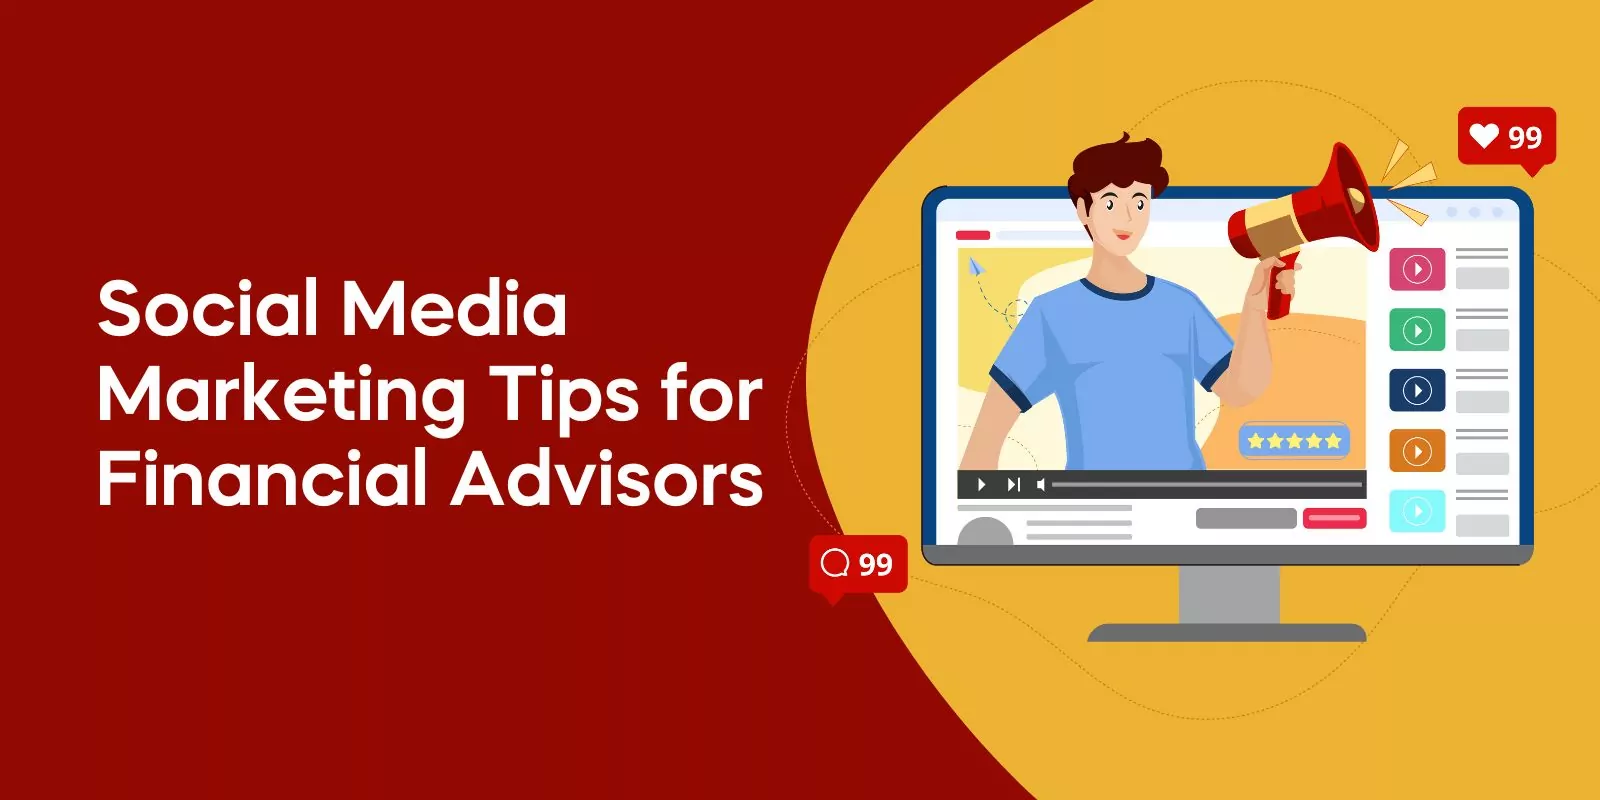 Social Media Marketing Tips for Financial Advisors